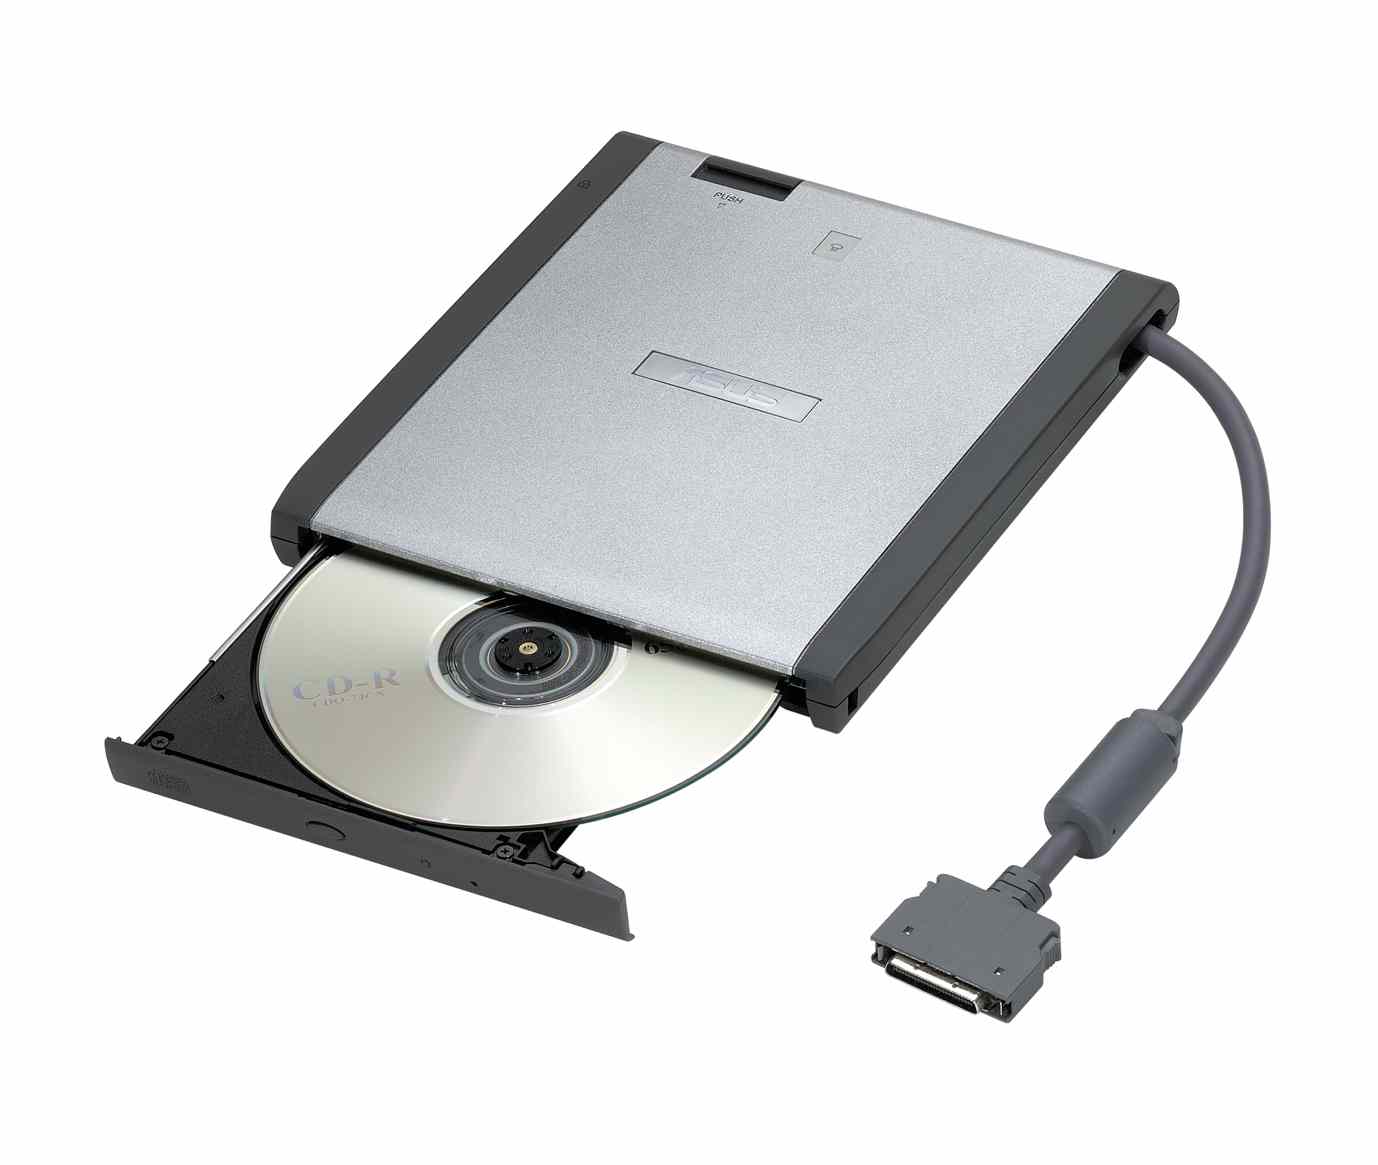 Технические сд. Дисковод ЕС-6075. Дисковод DVD-RW ASUS 1817. Привод CD 52x LG. Адаптер для СД привода для ноутбука ASUS.